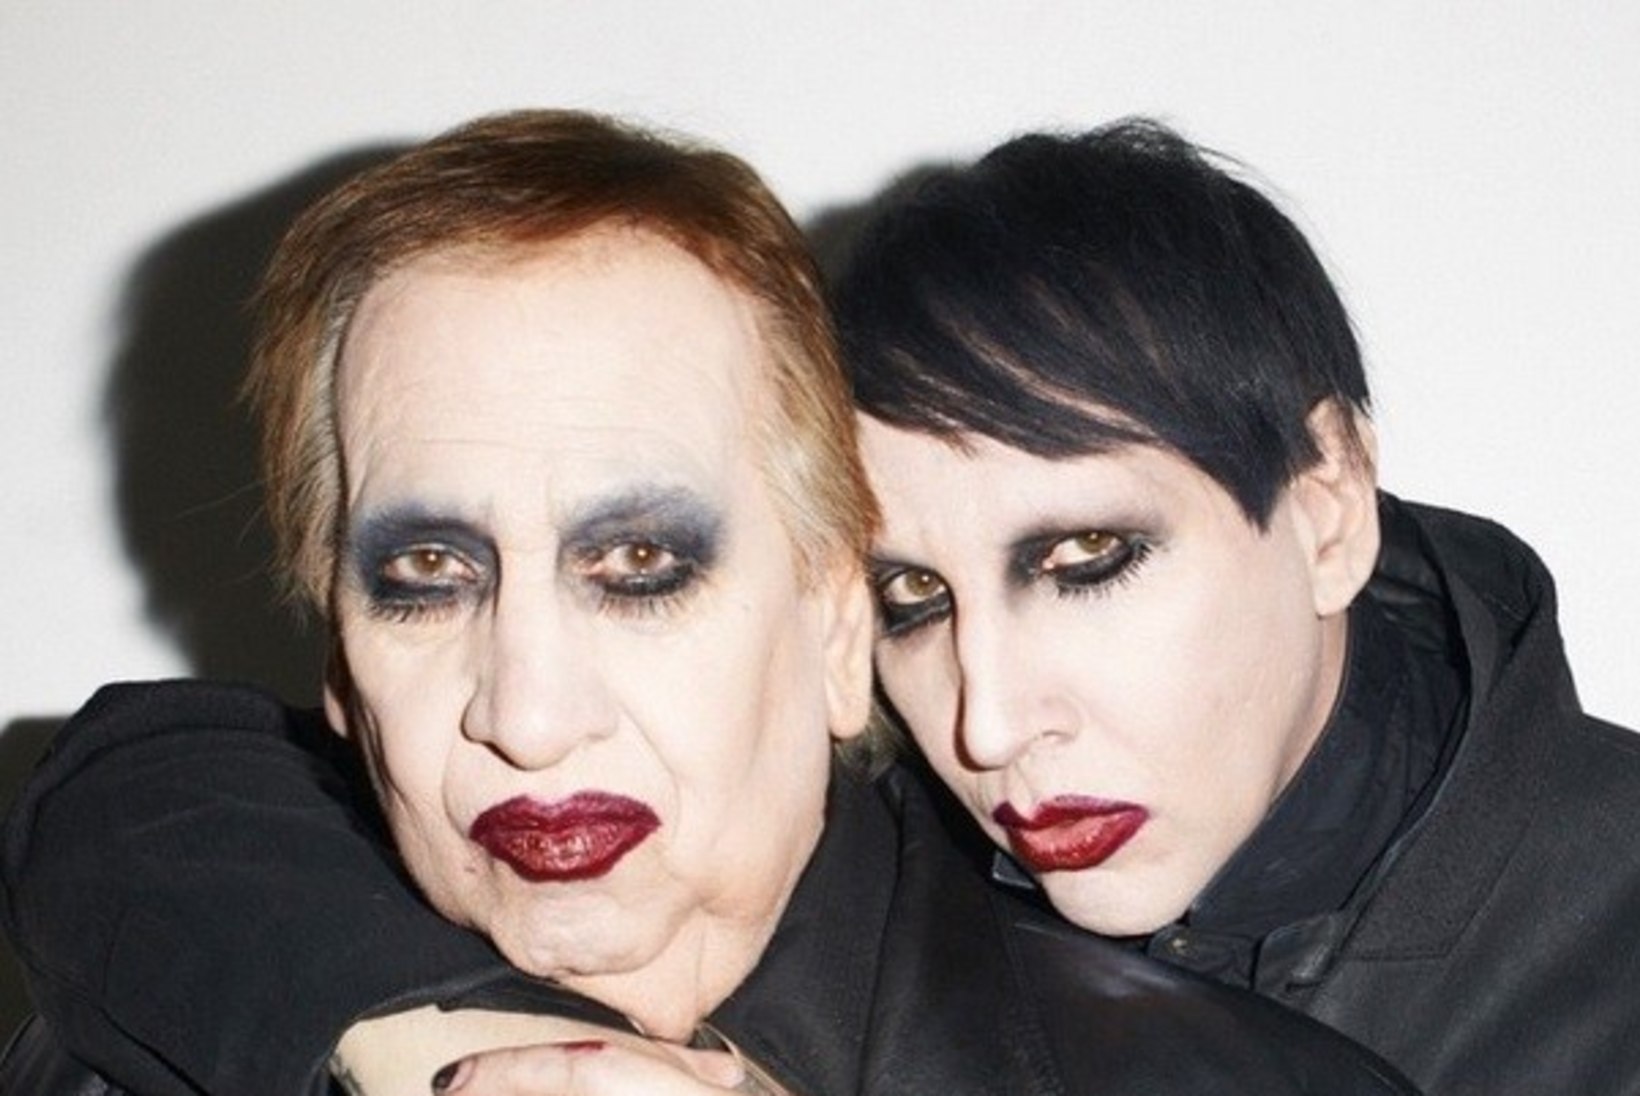 NAGU KAKS TILKA VETT: Marilyn Manson poseeris koos isaga